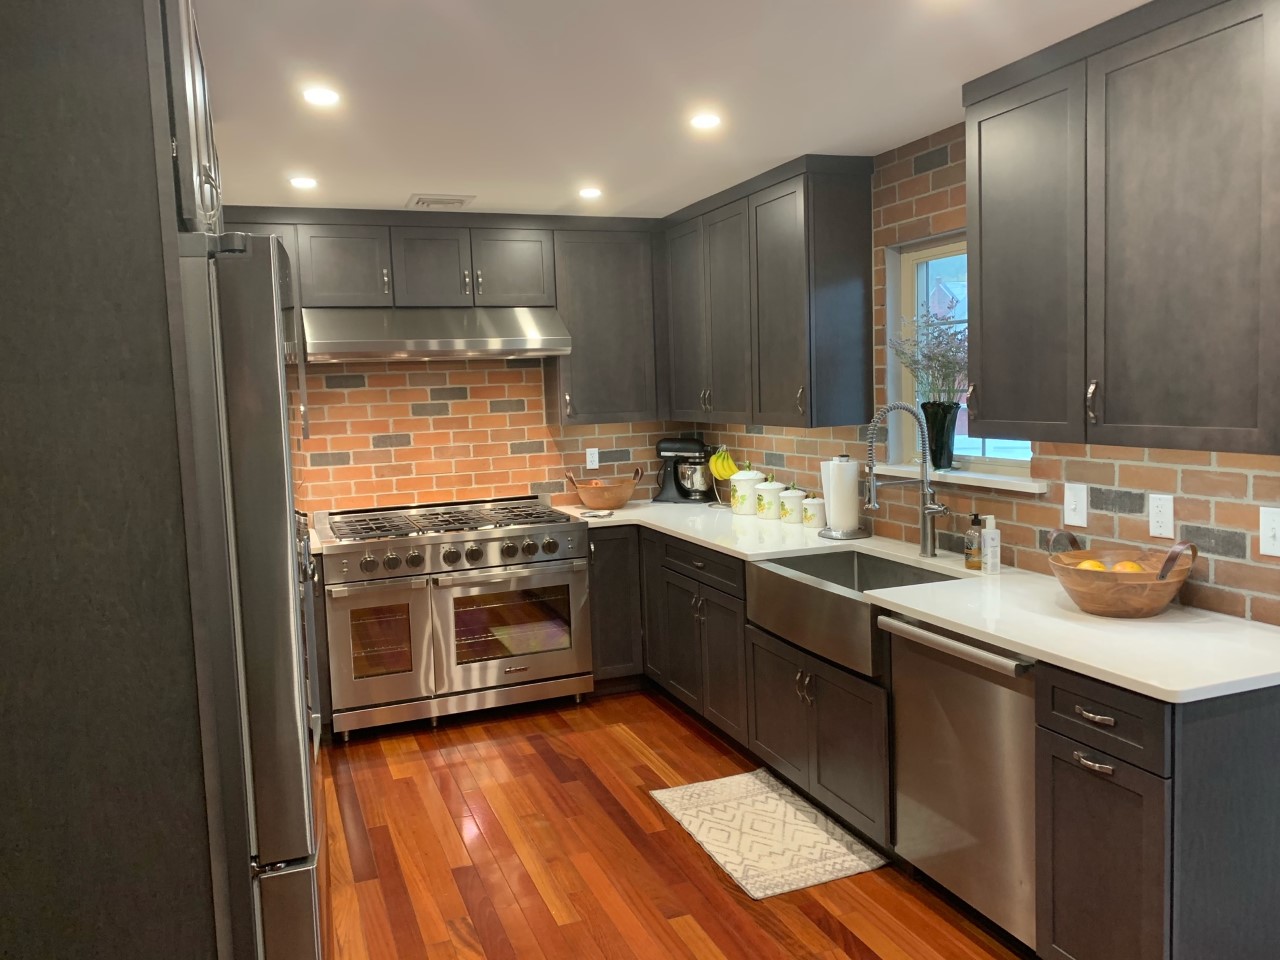 Hygge Kitchen with Brick Backsplash and Grey Cabinets